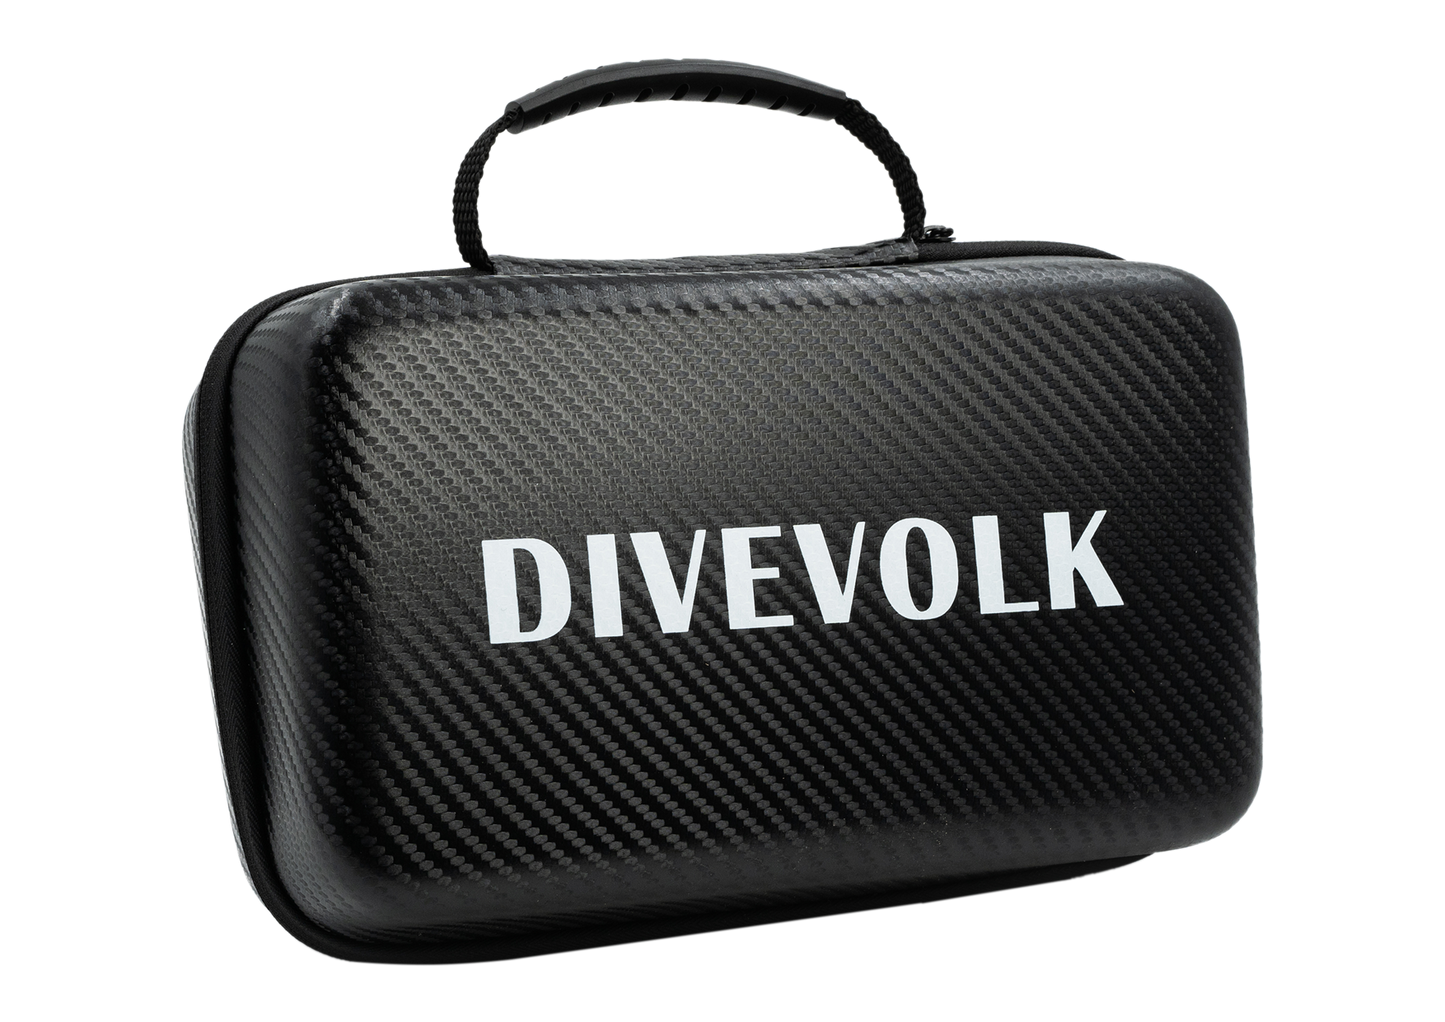 DIVEVOLK EVA box for 4 max